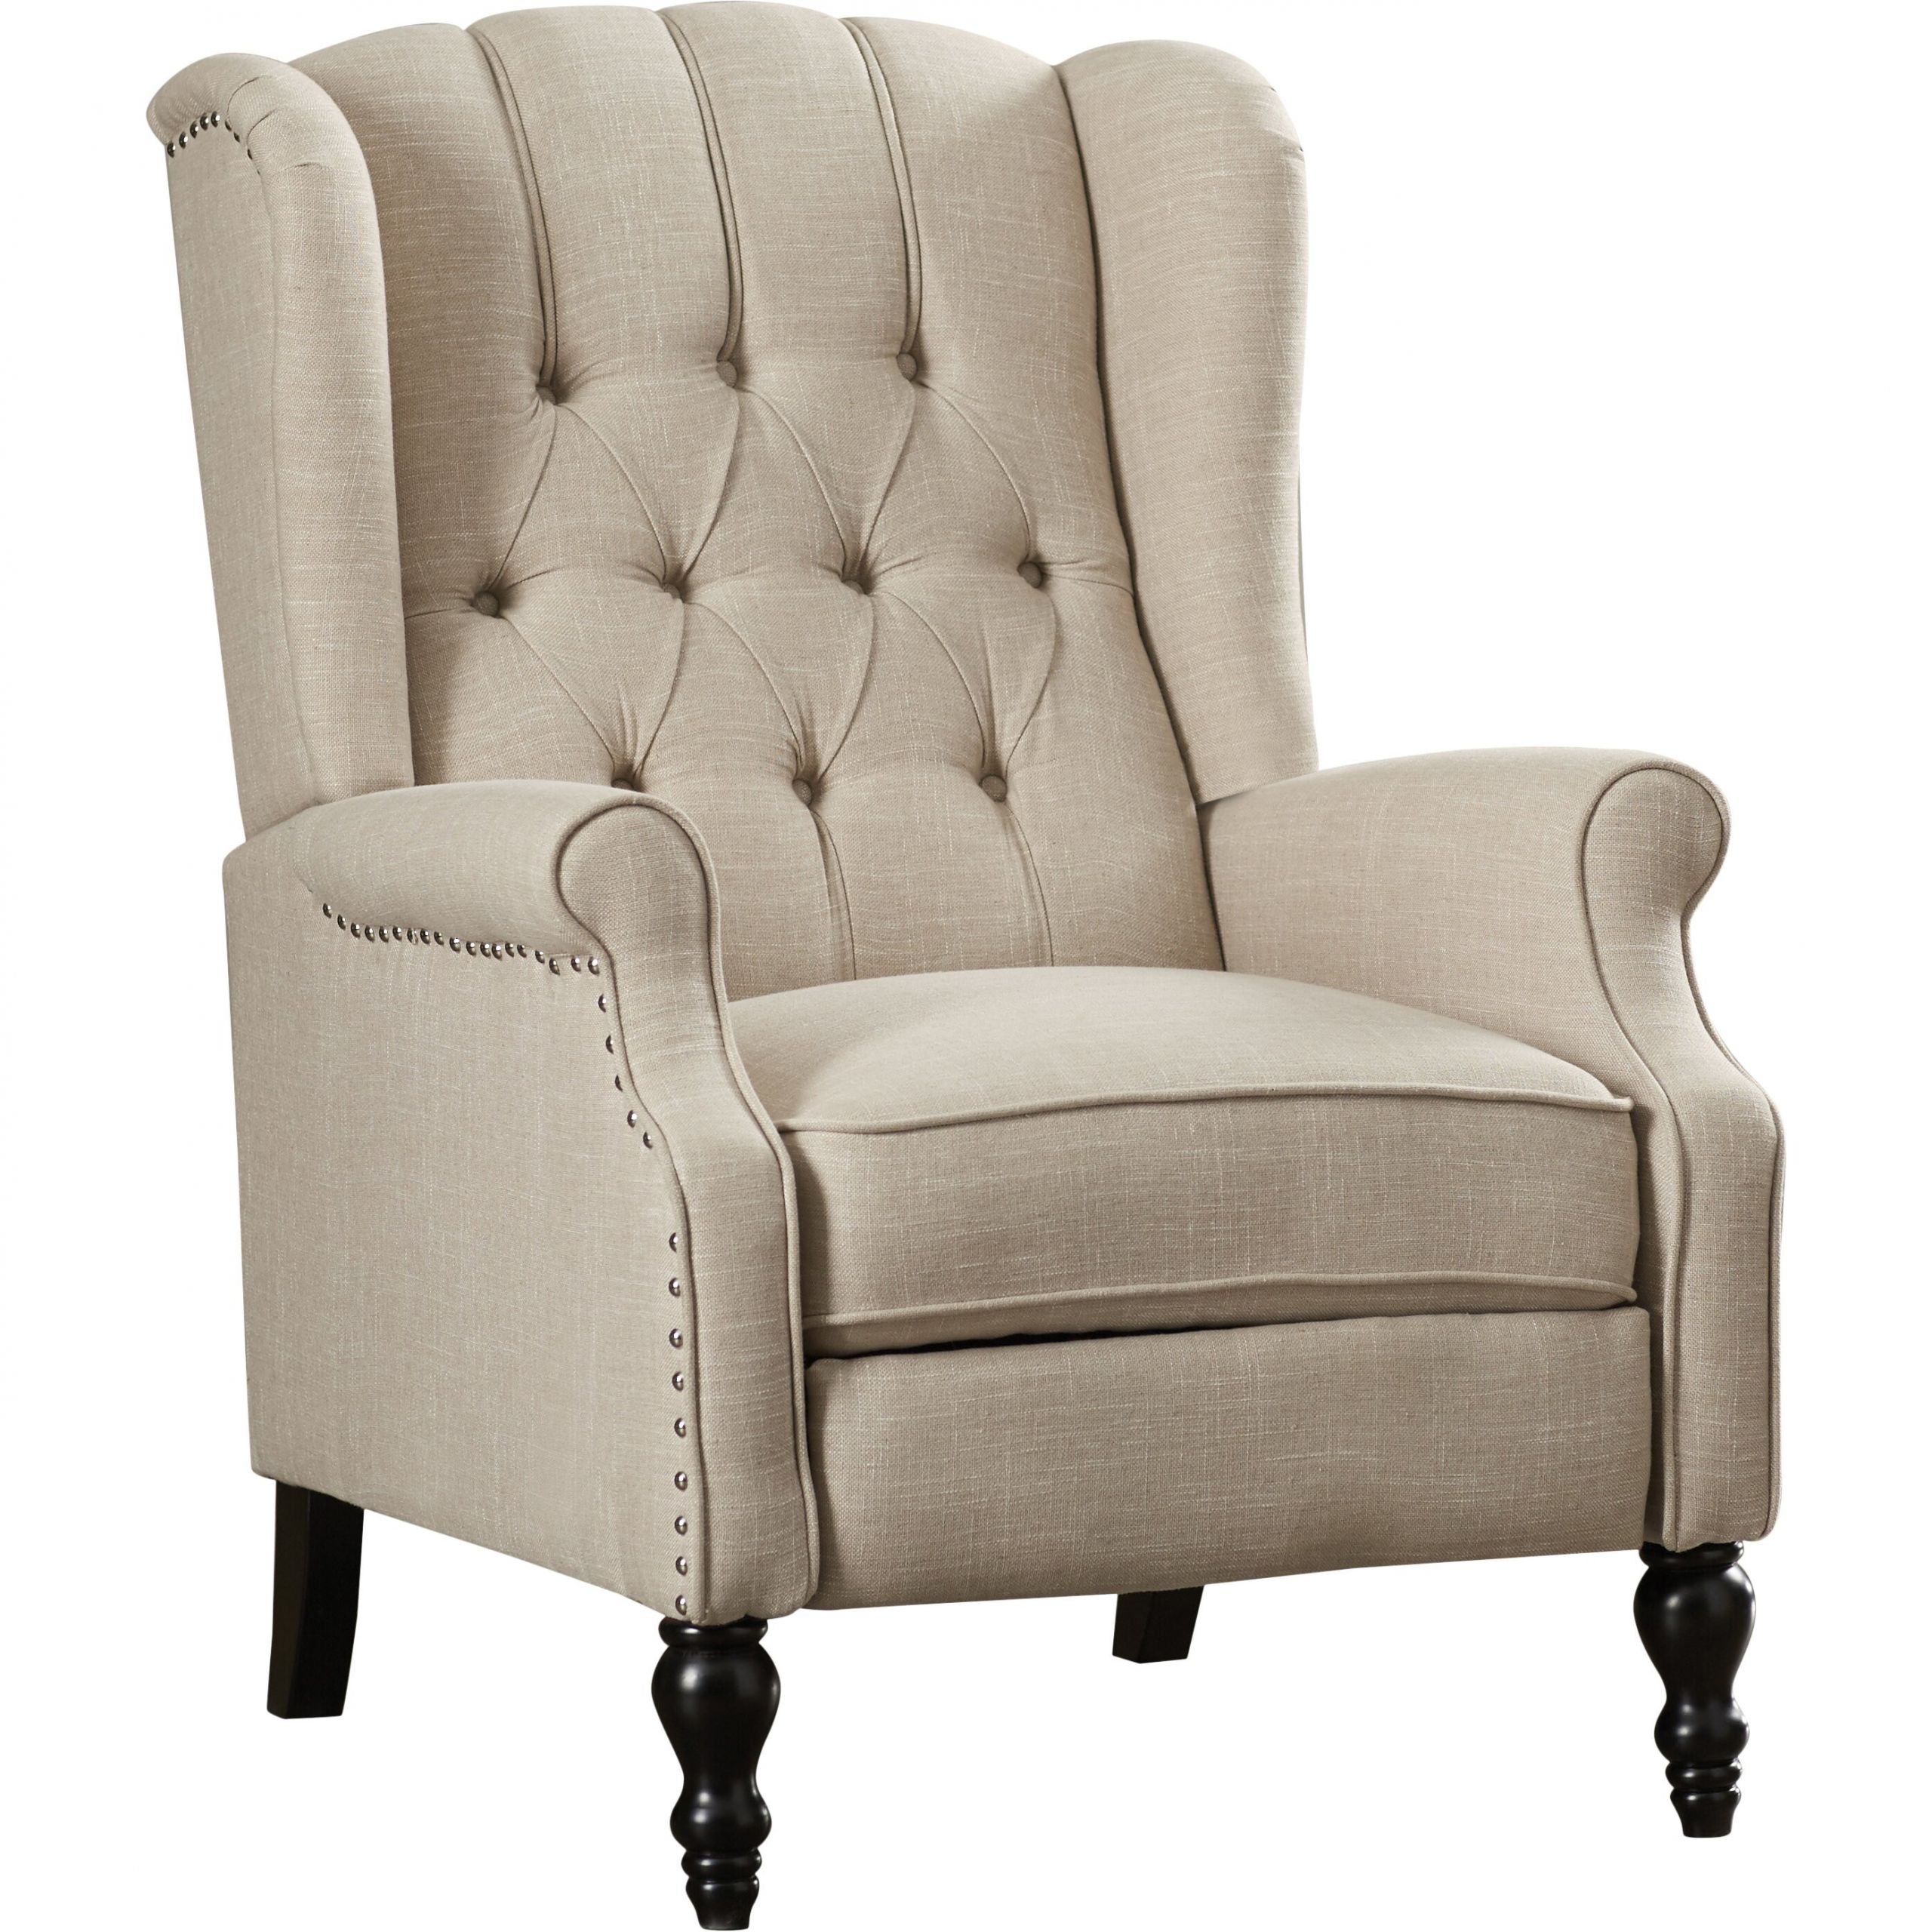 Wayfair Chairs Living Room
 Three Posts Sharpsville Recliner & Reviews